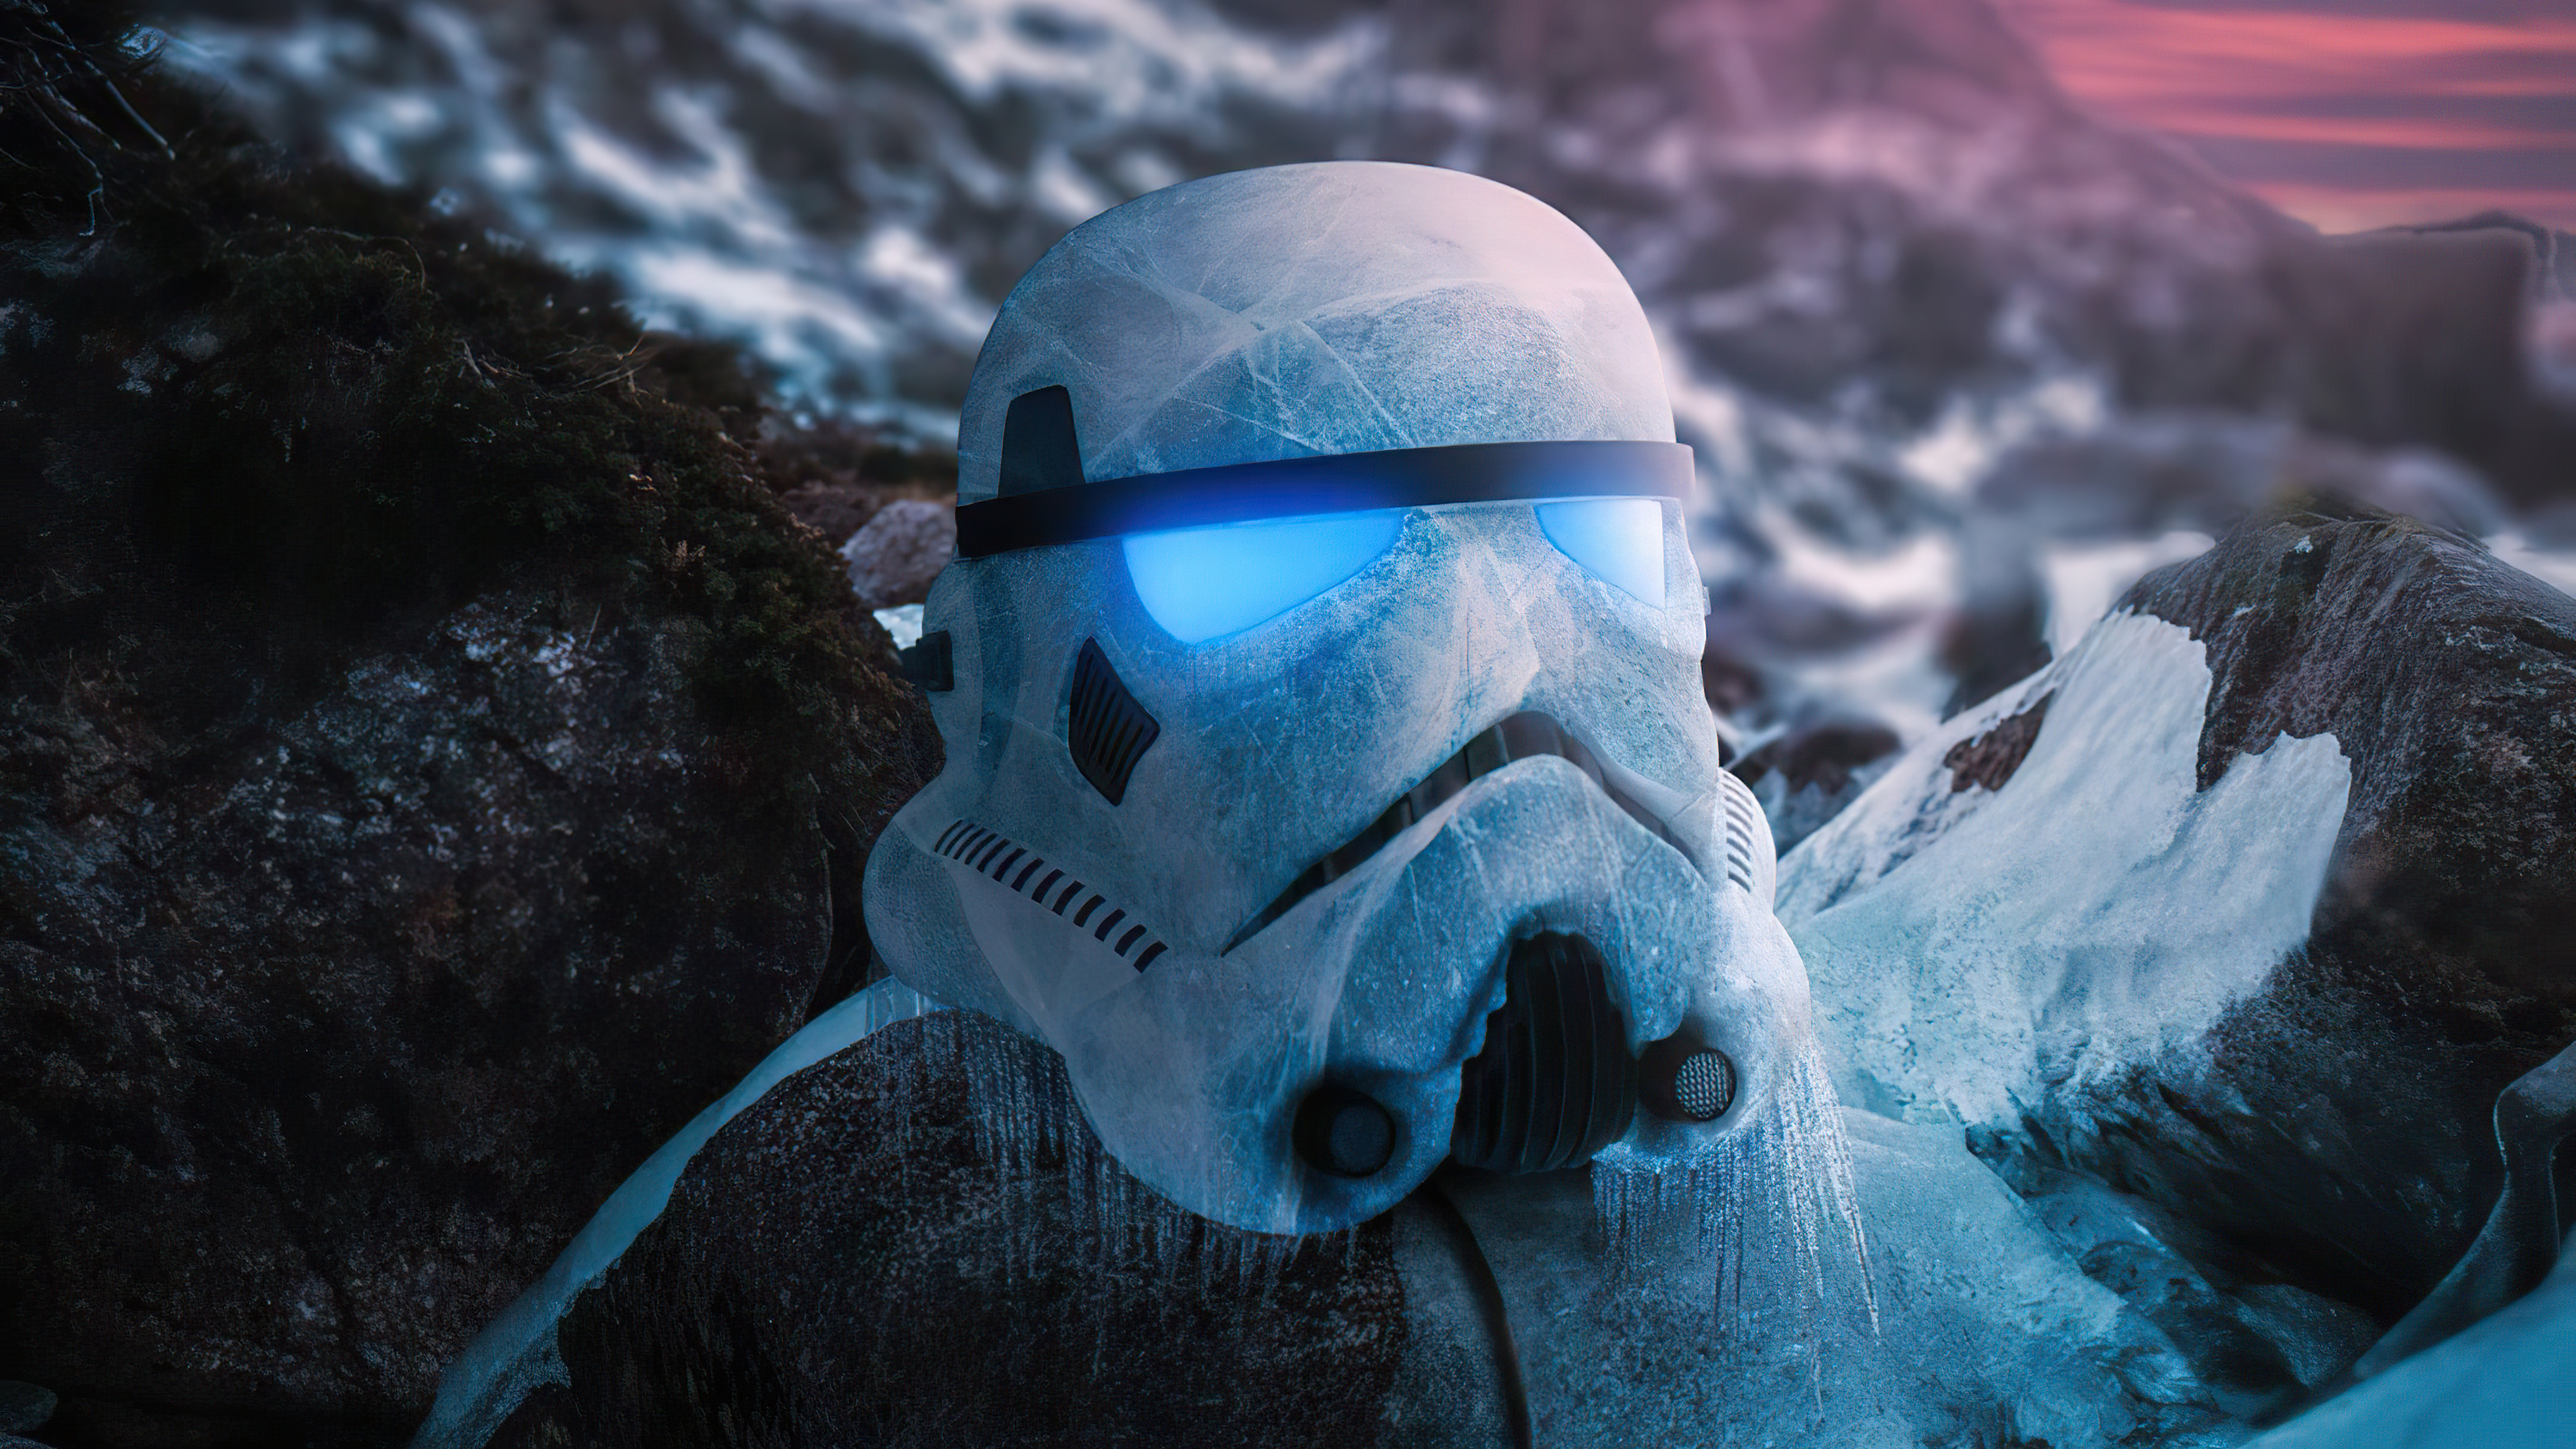 Stormtrooper 4k Ultra HD Wallpaper